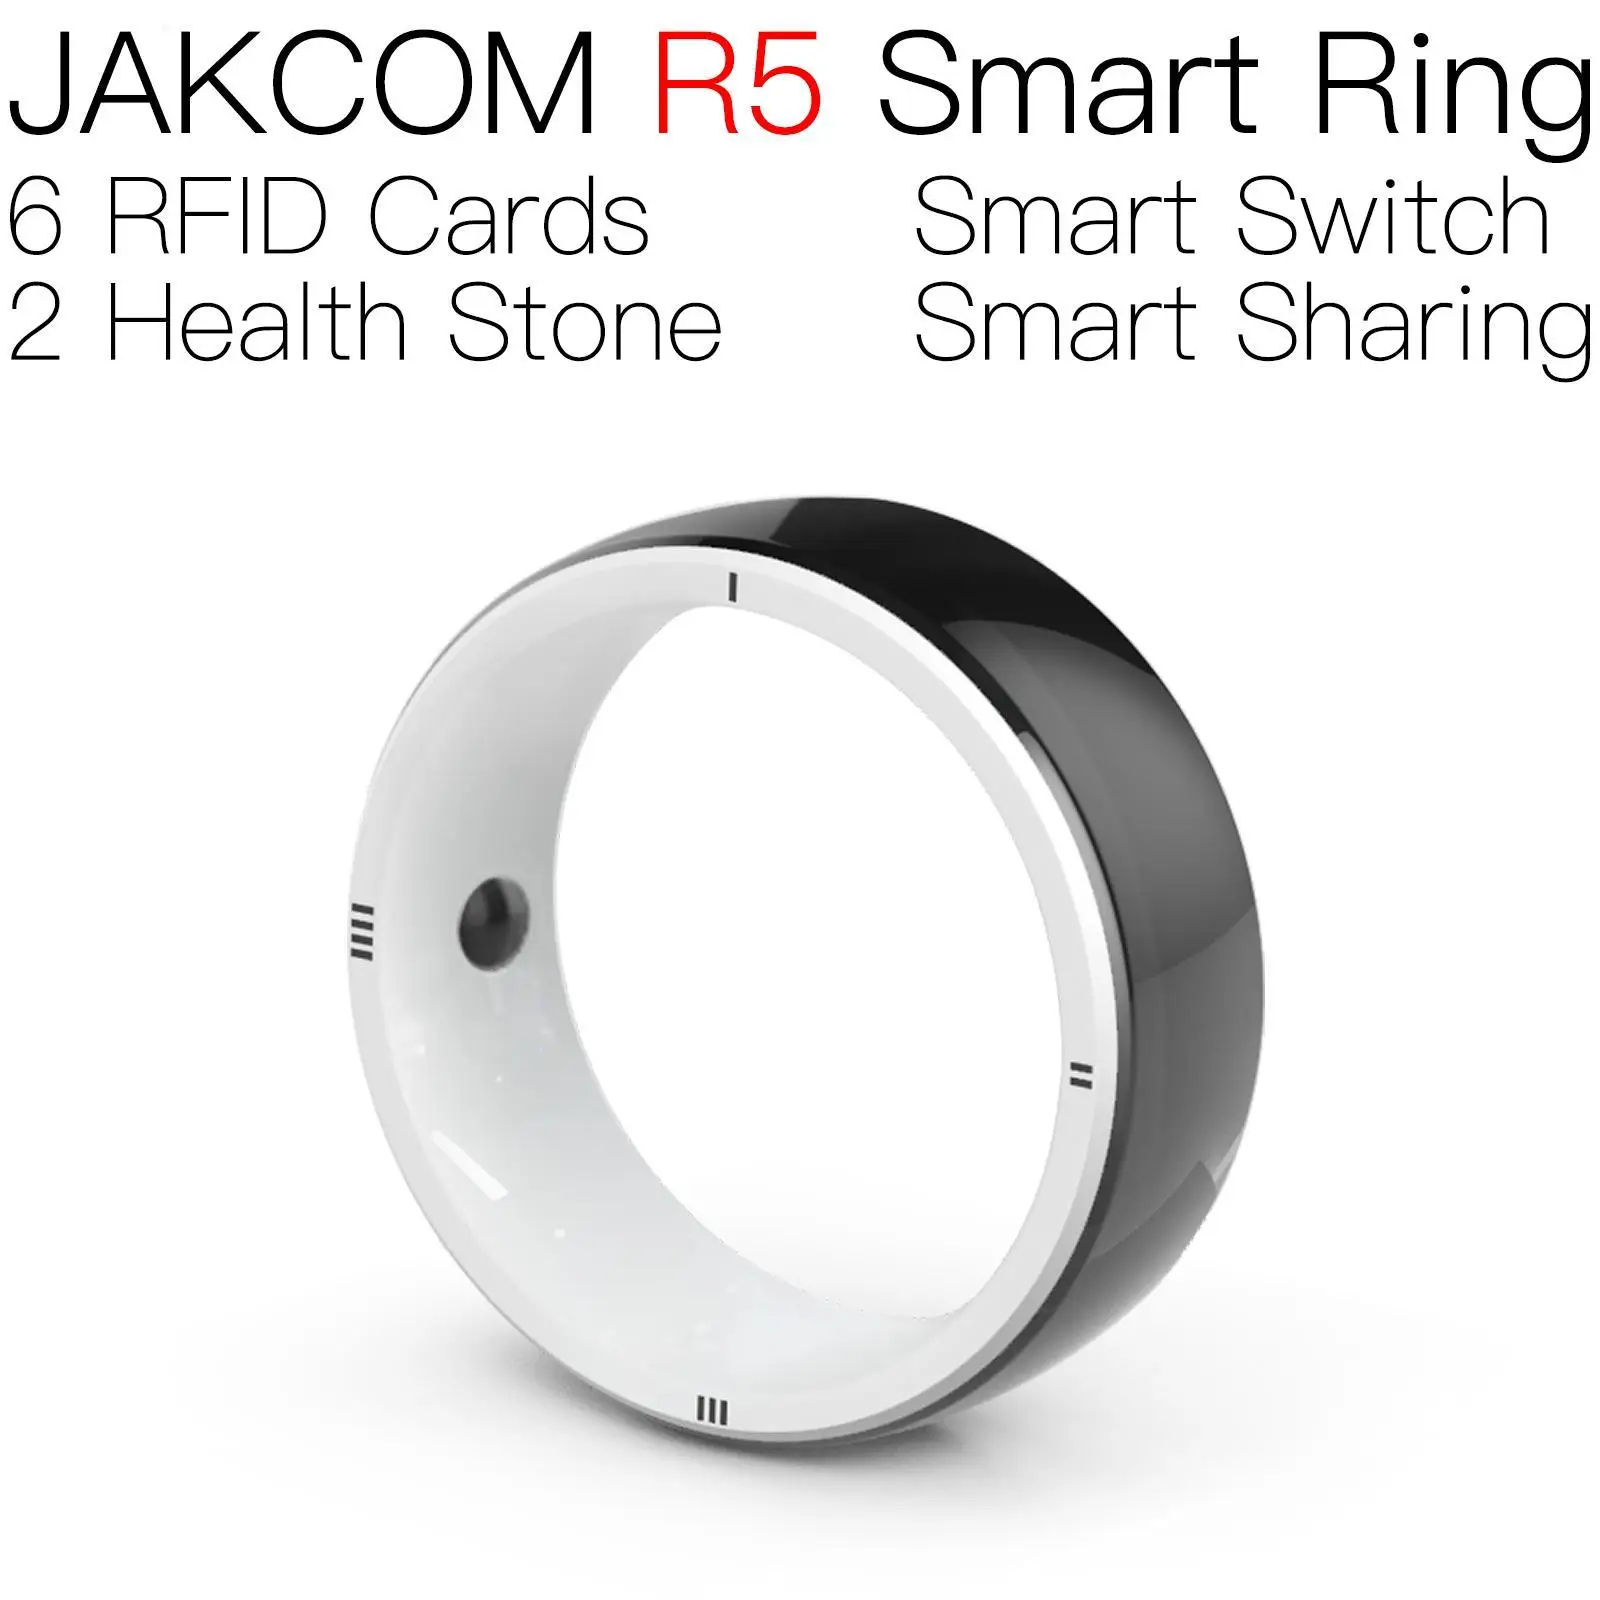 

JAKCOM R5 Smart Ring New arrival as baby charon smart nfc buisness card munt tag rfid jewel 125hz slim gadgets